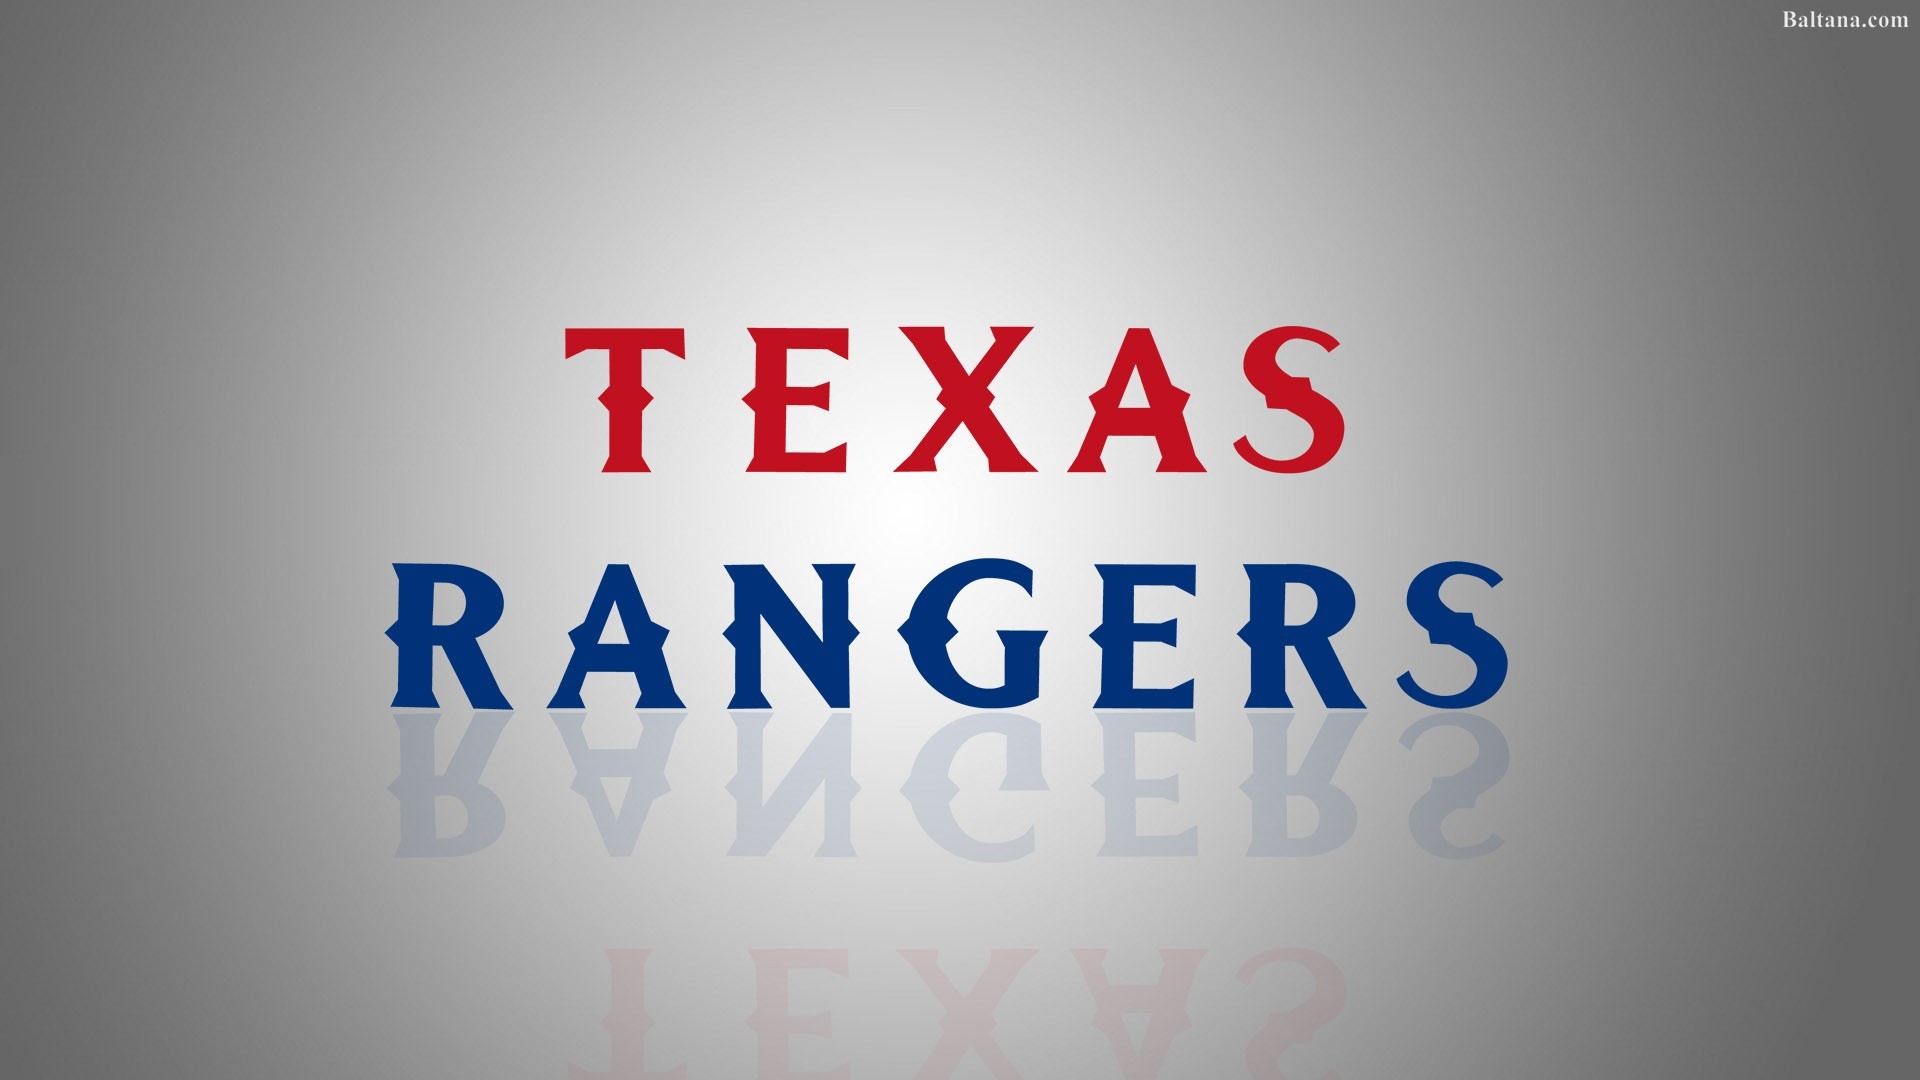 1920x1080 Texas Rangers HD Wallpaper 12 - 1920 X 1080